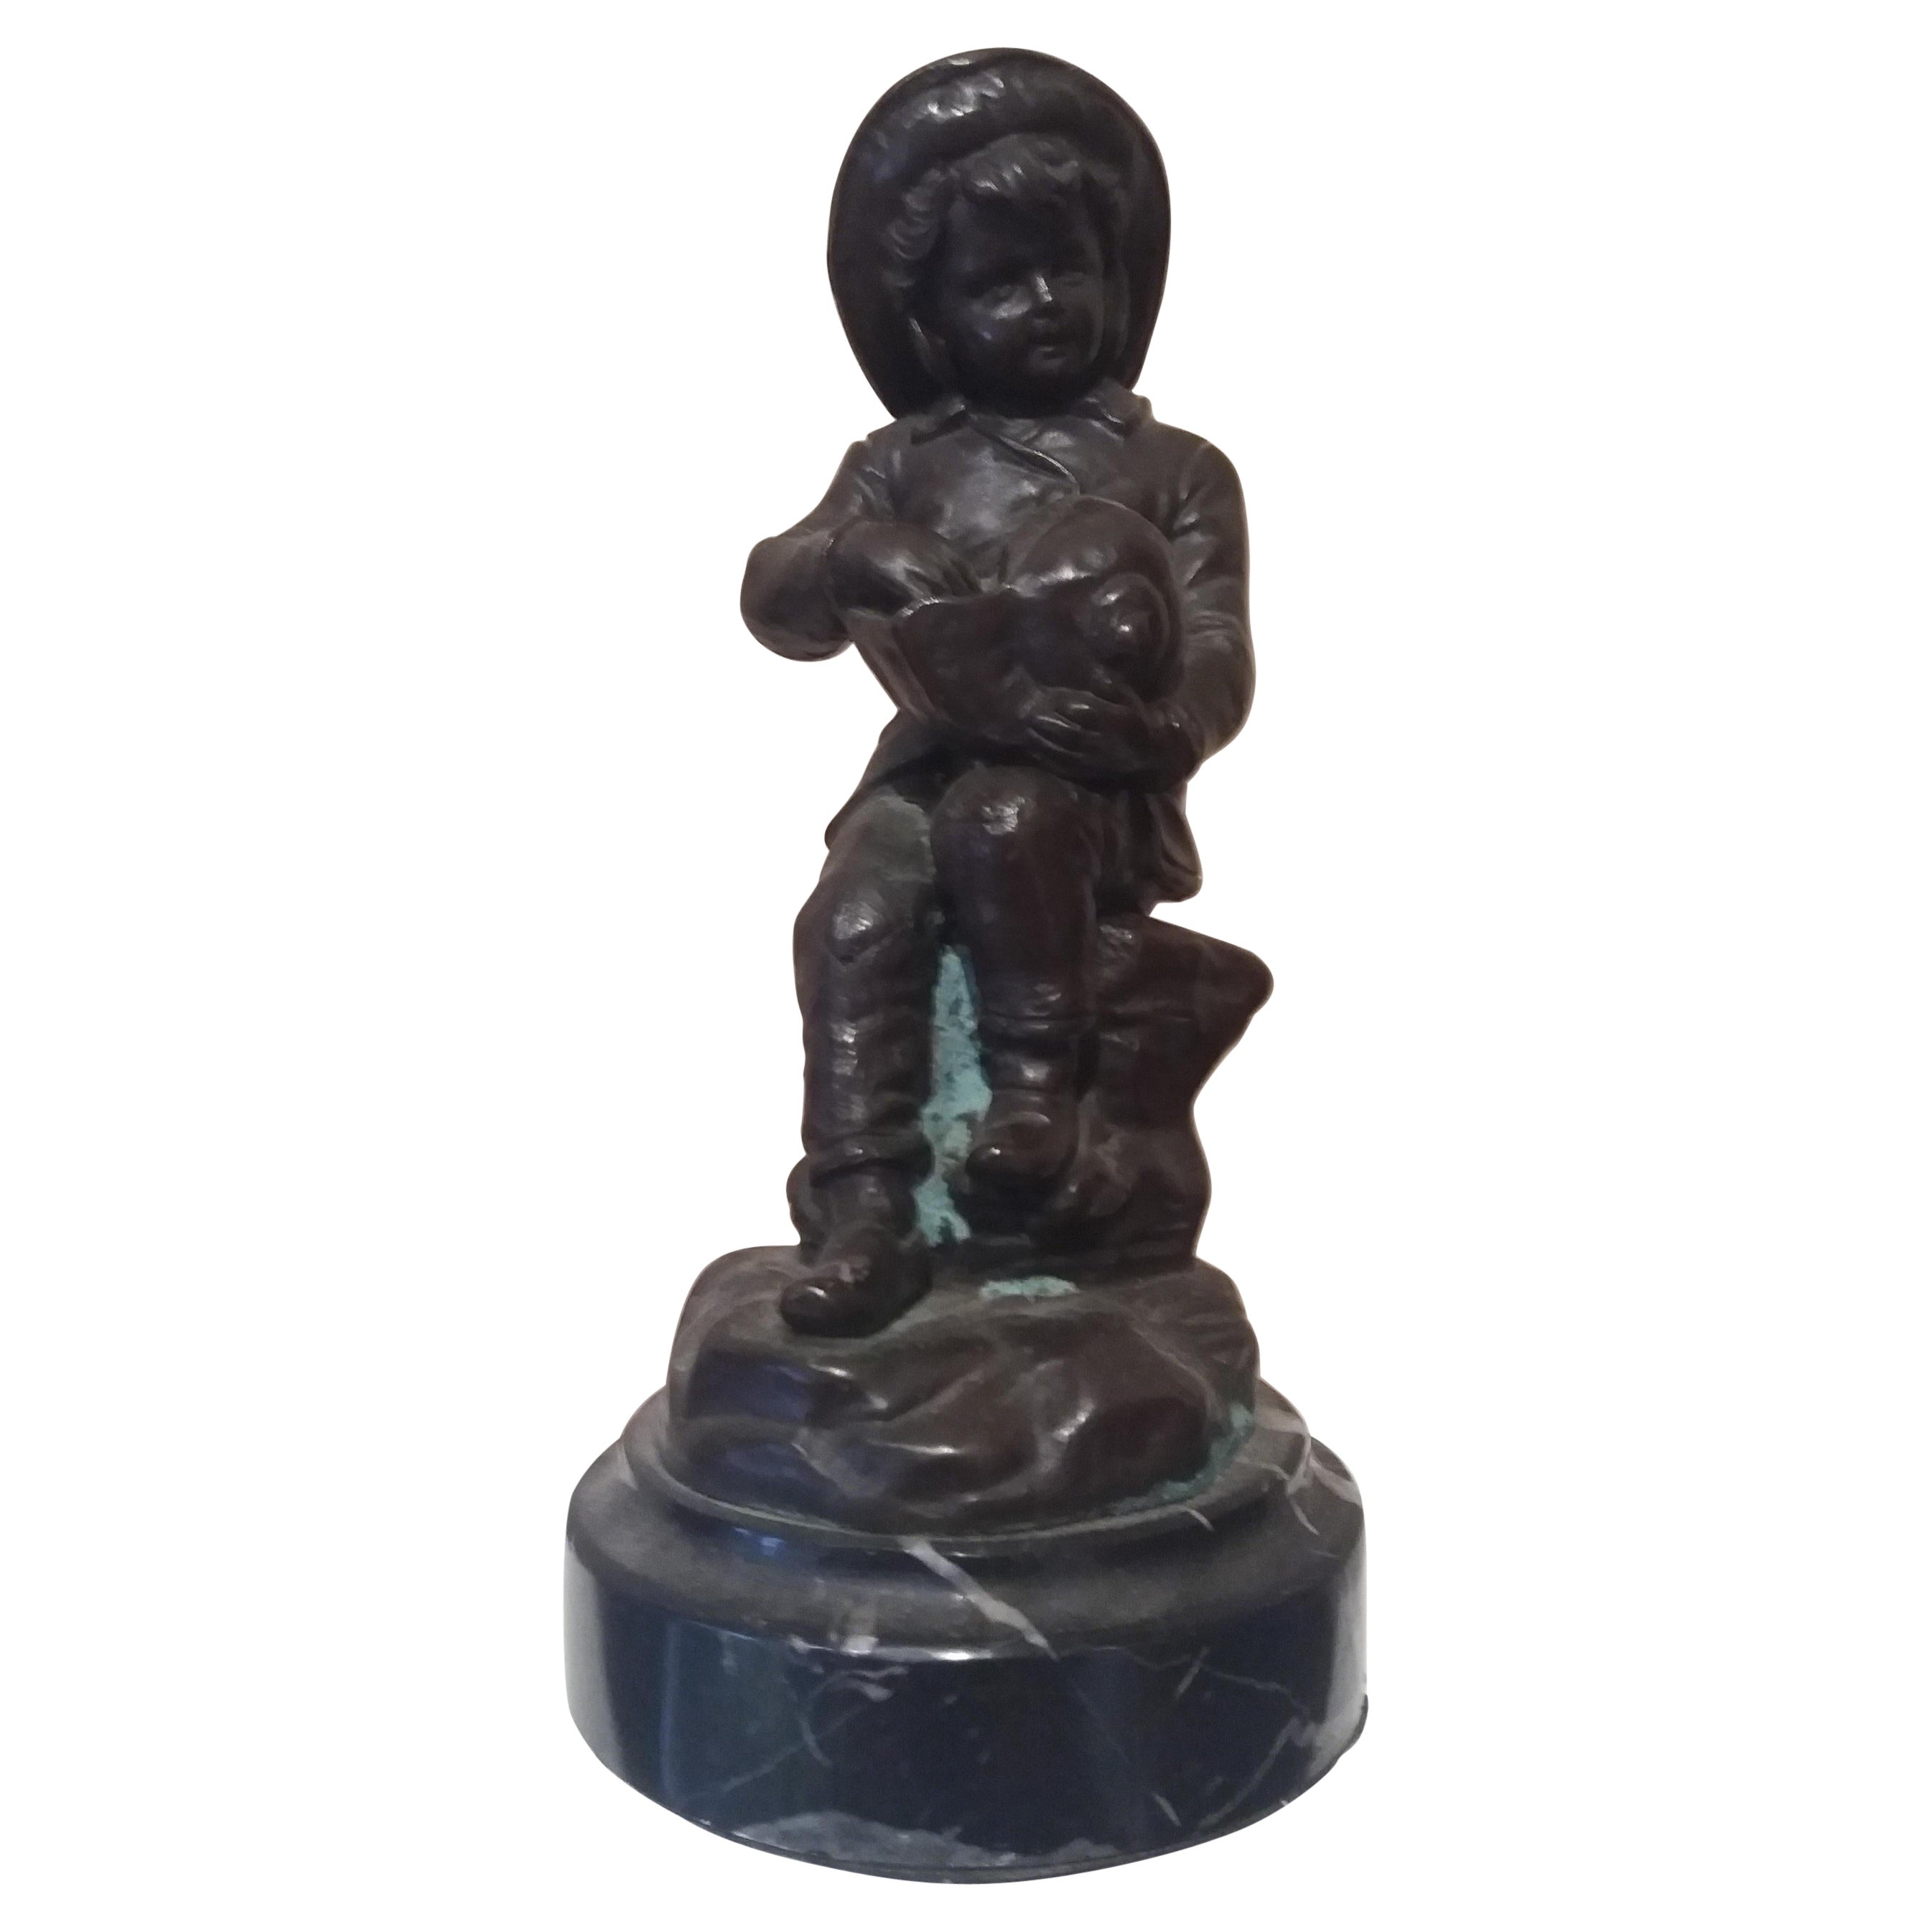 BOLLEL Figurative Sculpture -  Bollel  Child and conch shell. Original multiple bronze sculpture